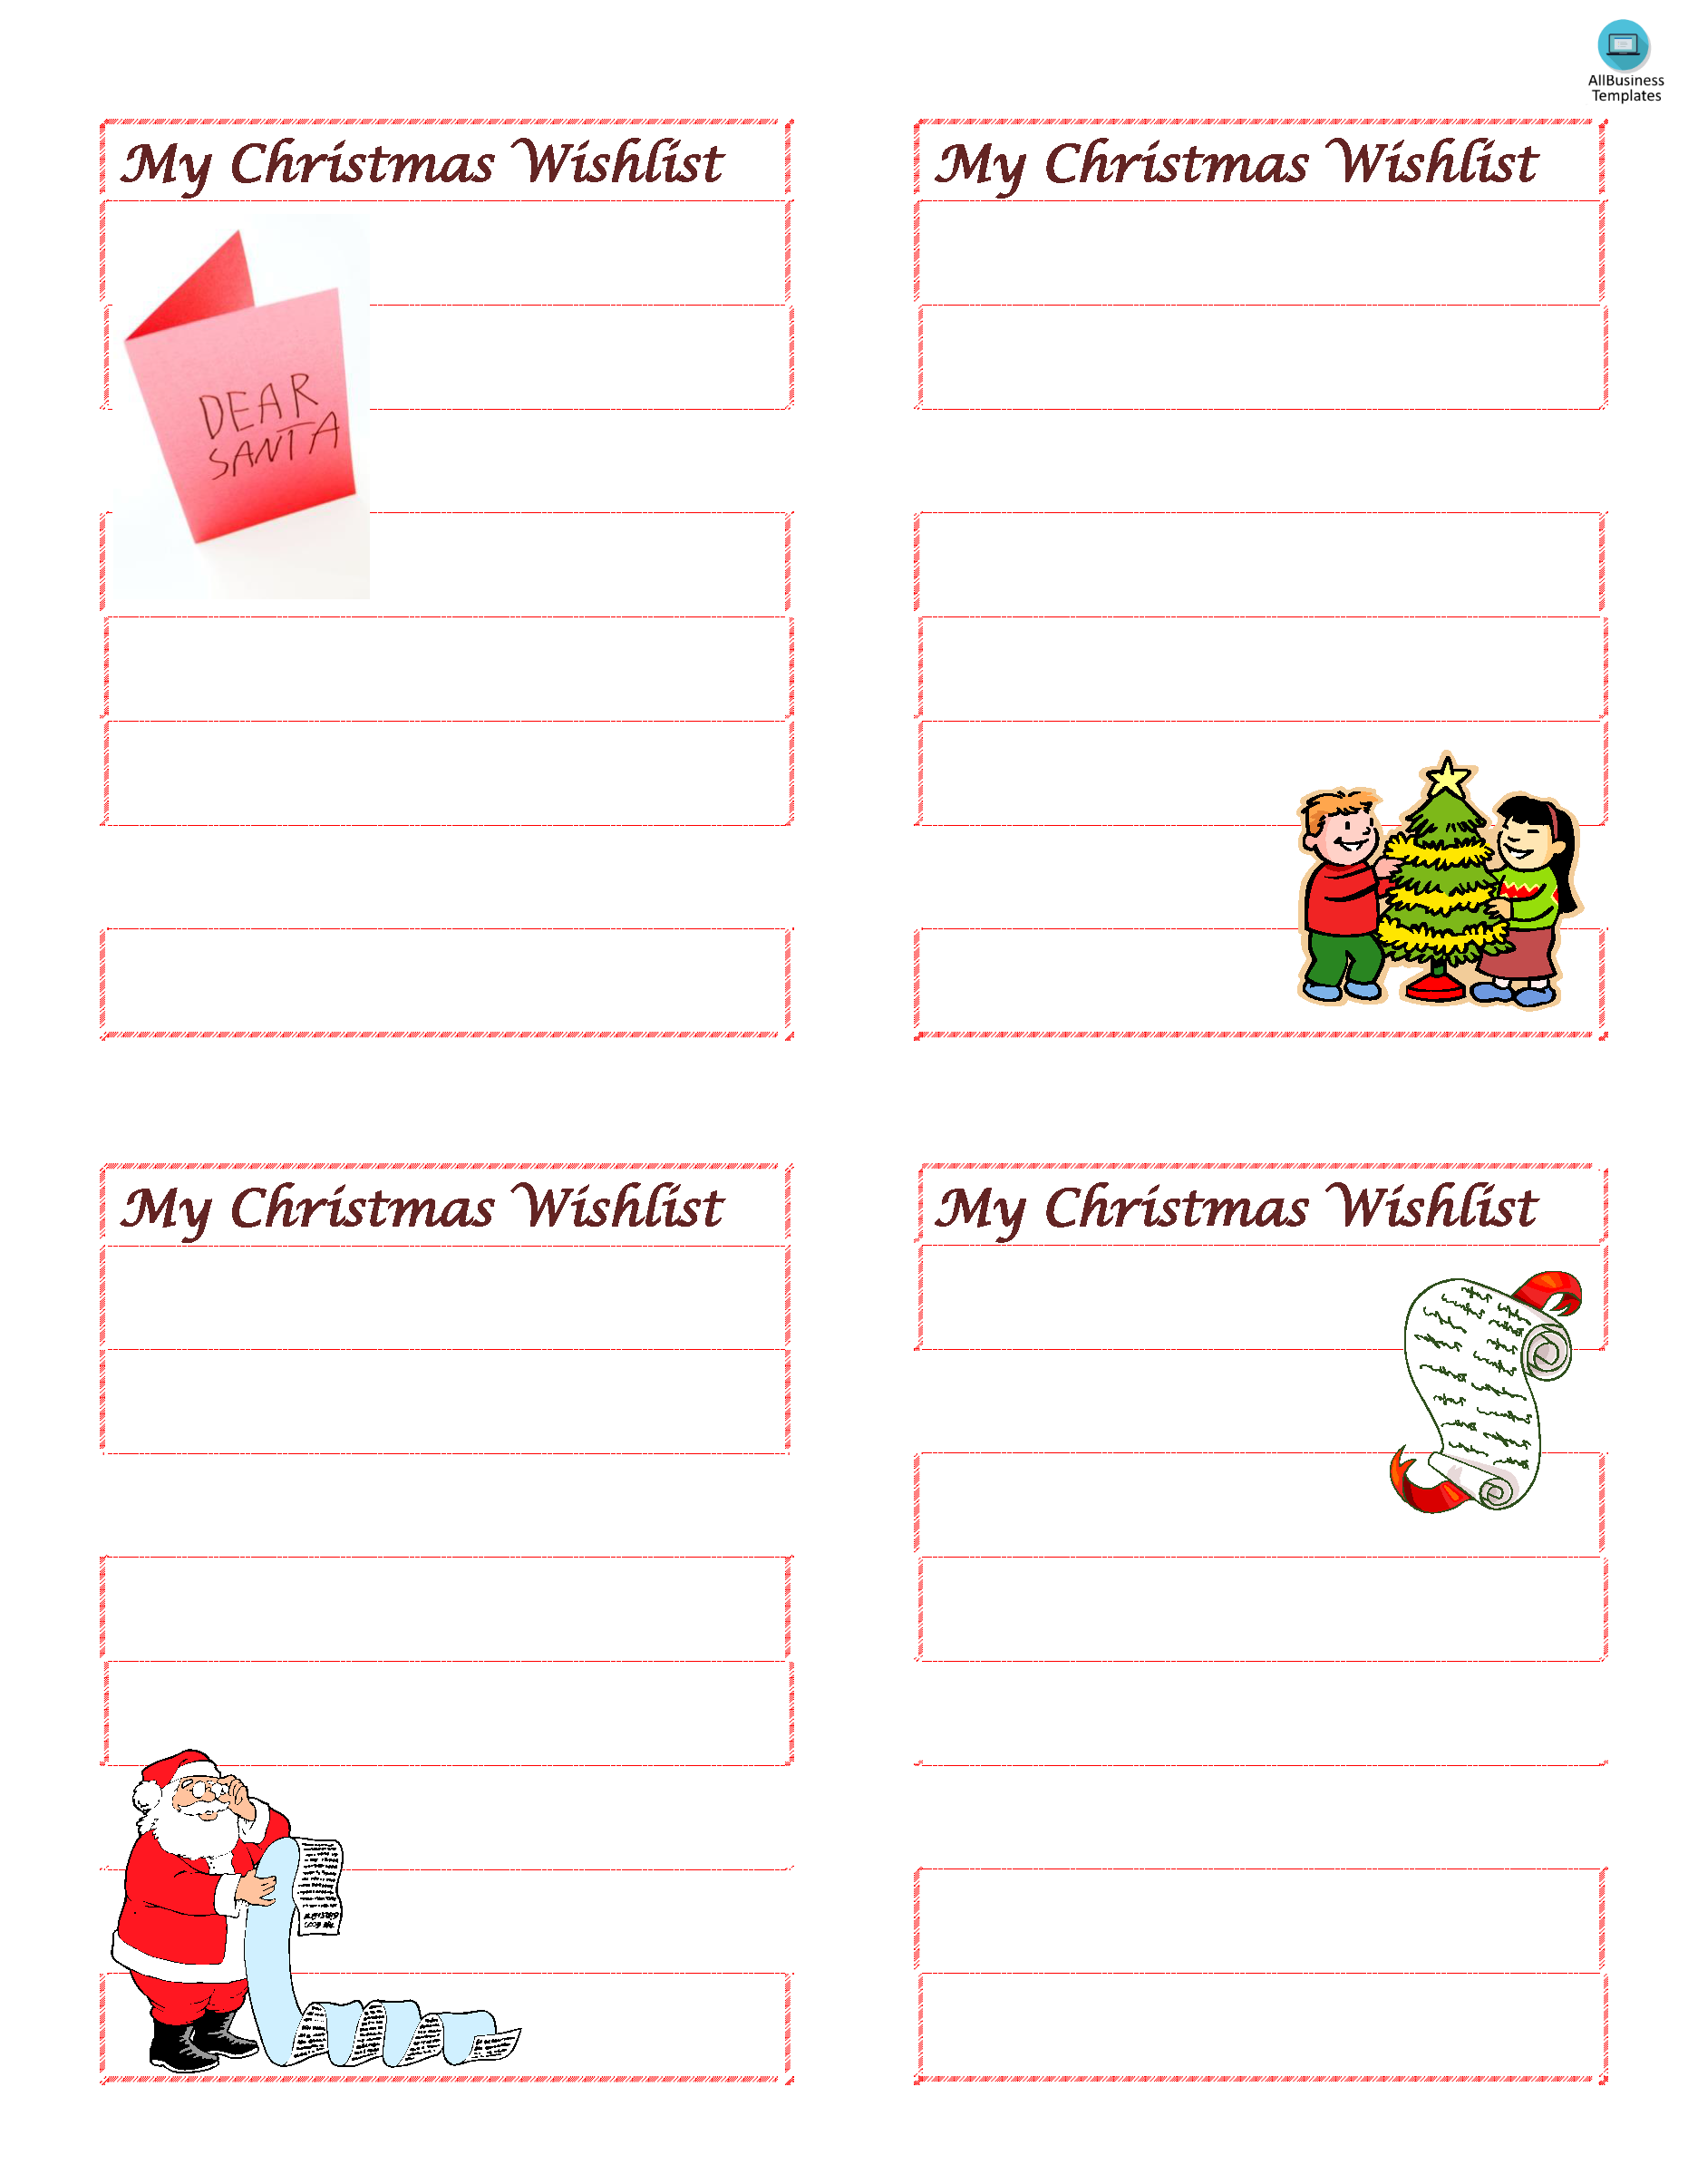 wish list for christmas template